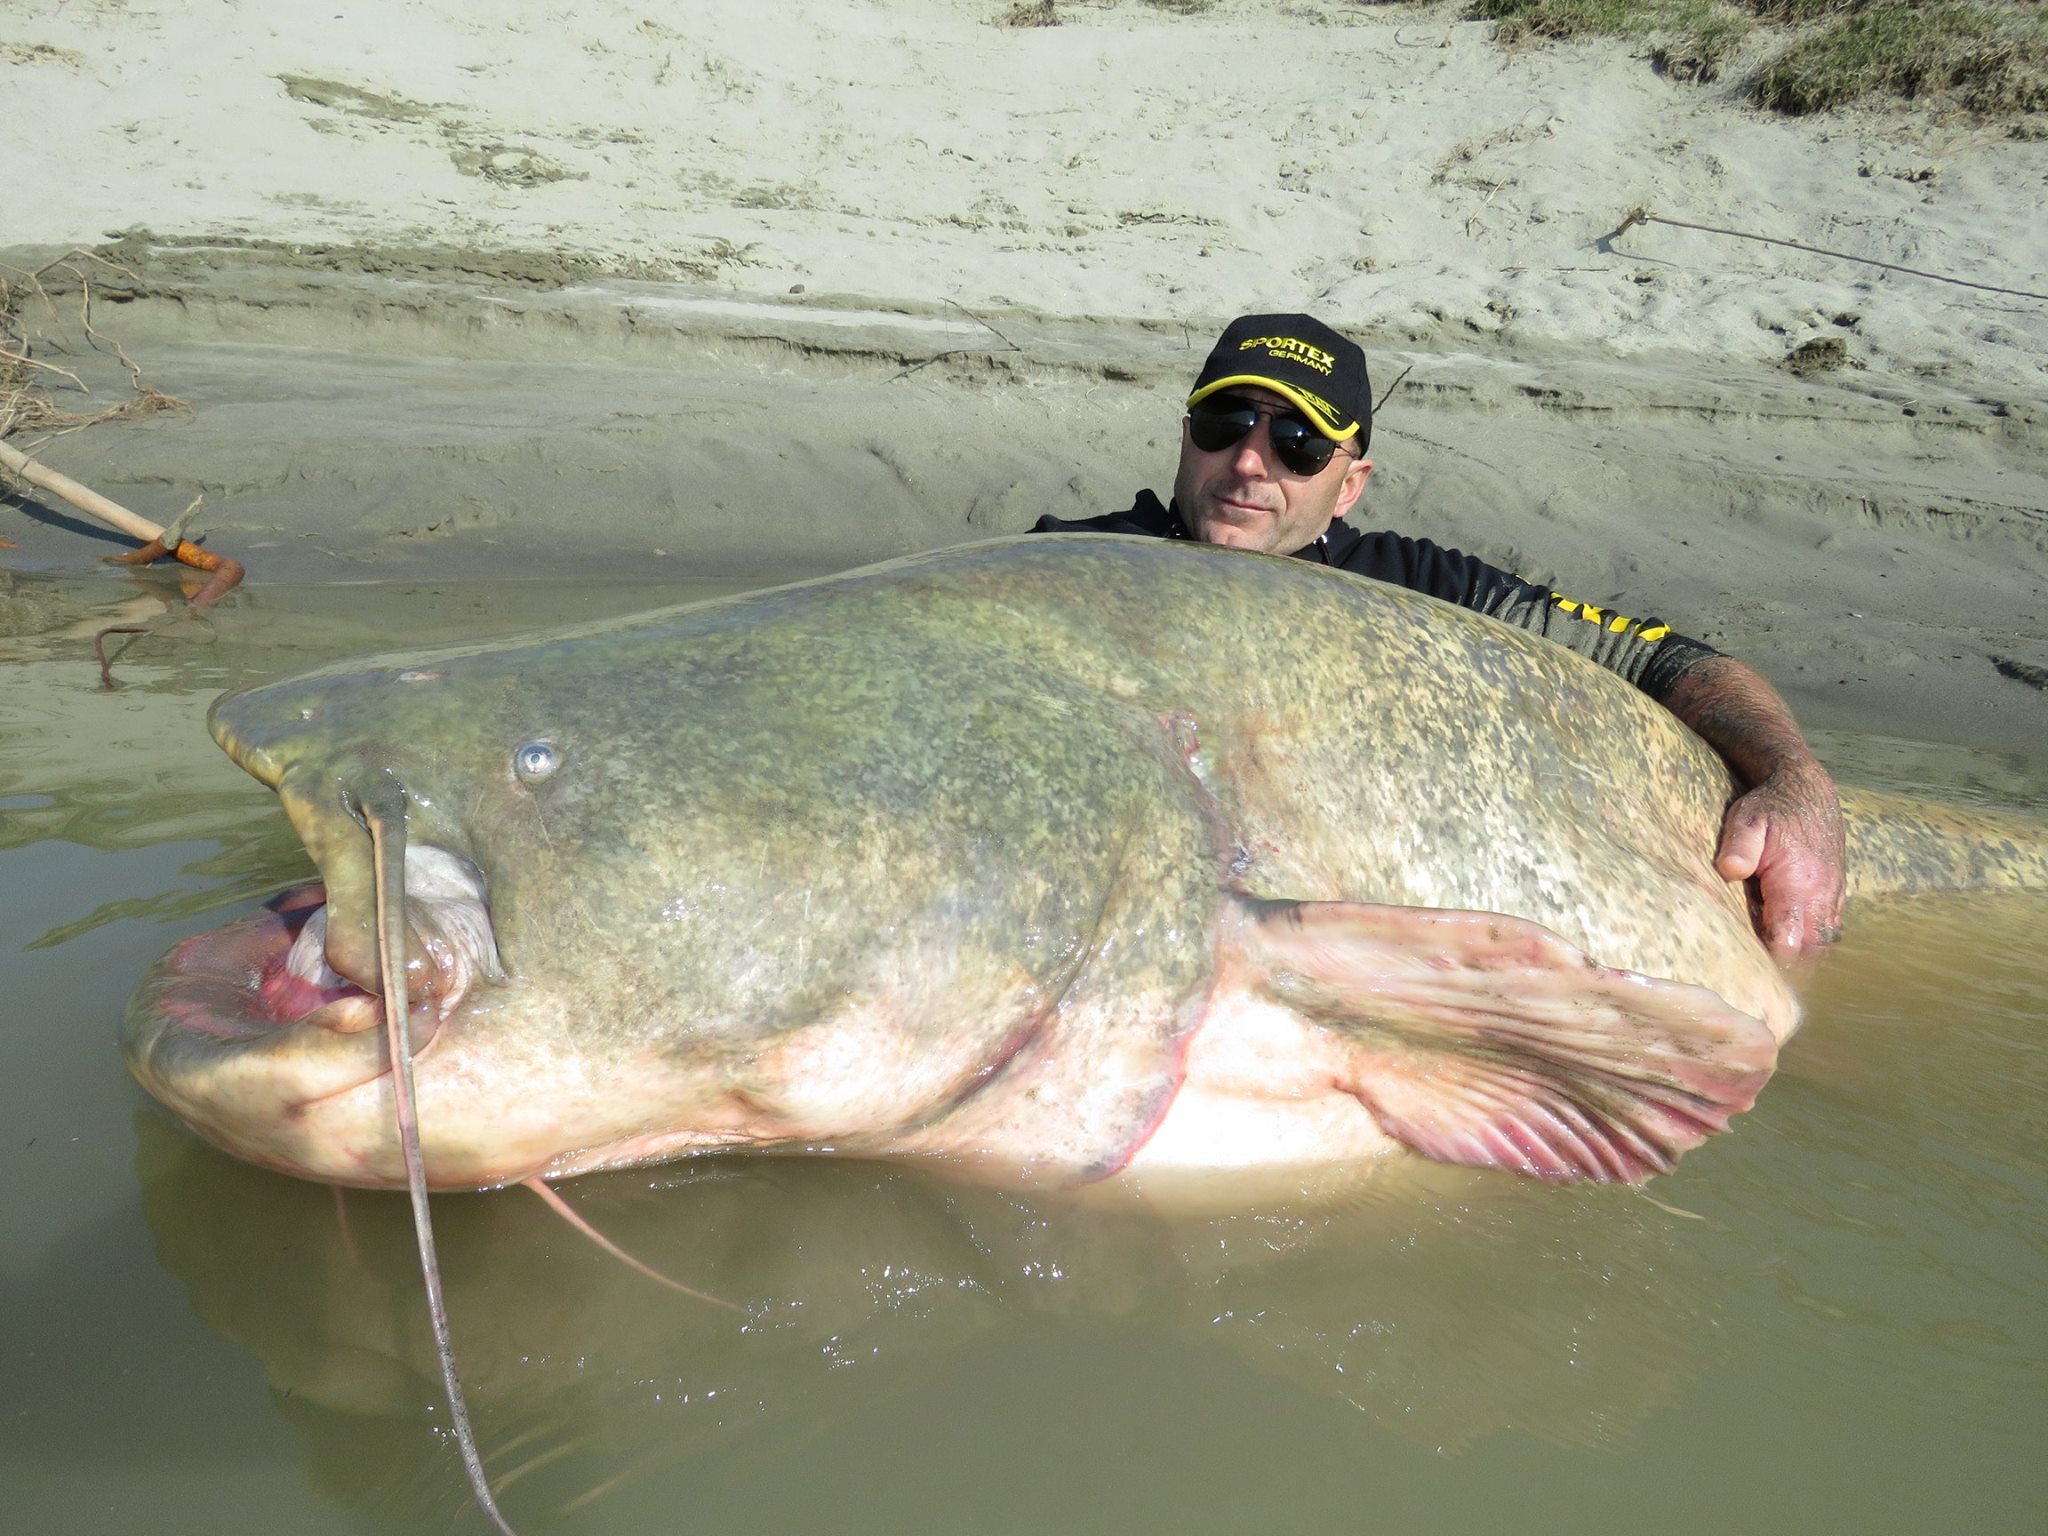 Monster 127kg Catfish Caught In Italy